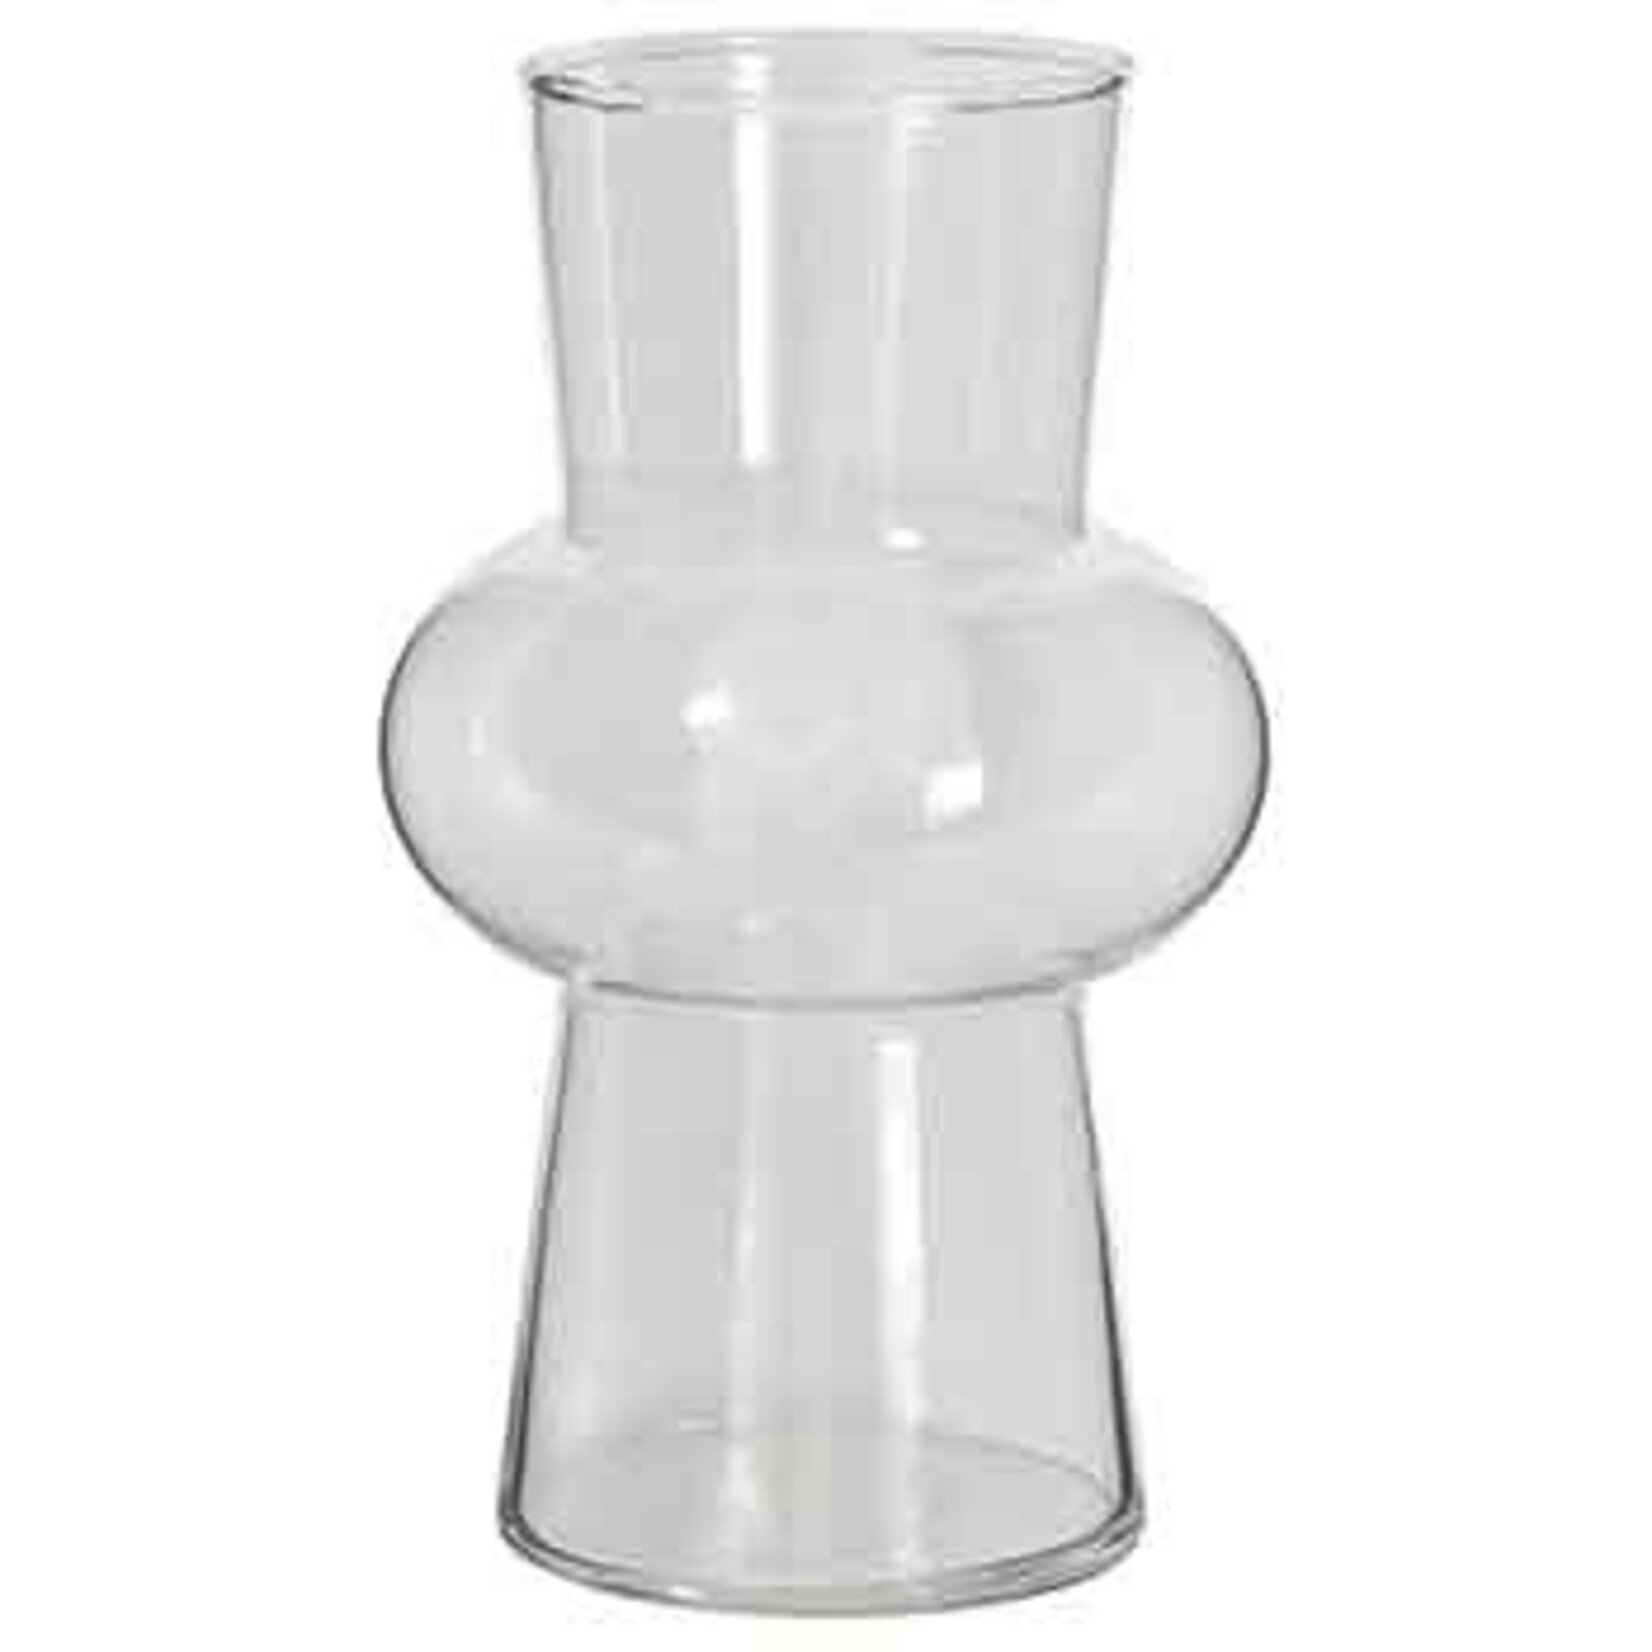 8”H X 4.25” CLEAR GLASS LANTERN DORA VASE